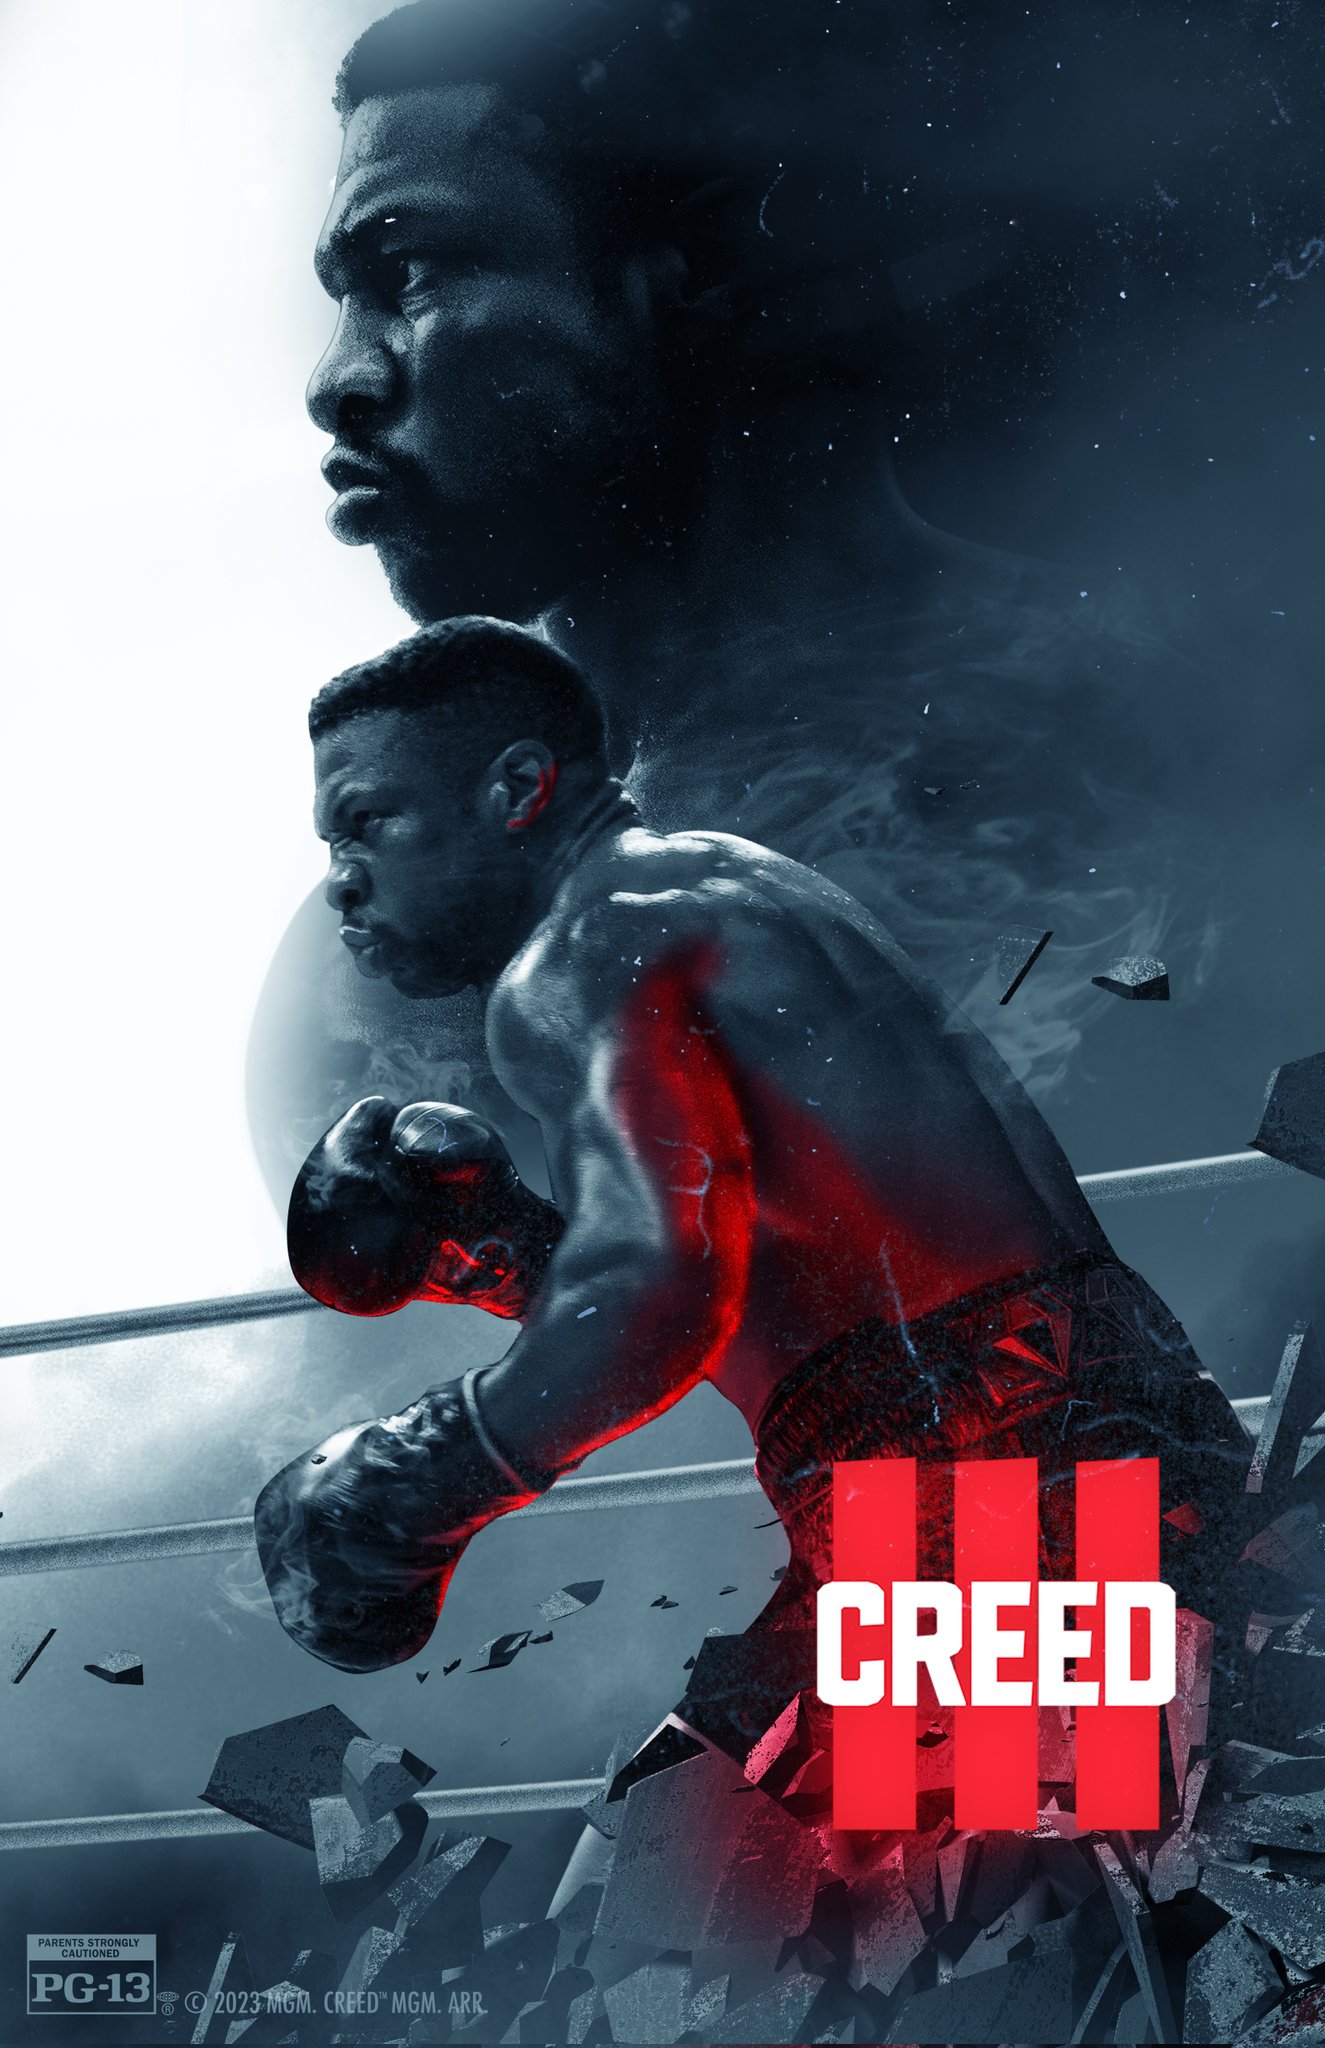 Creatieve Creed 3 posters